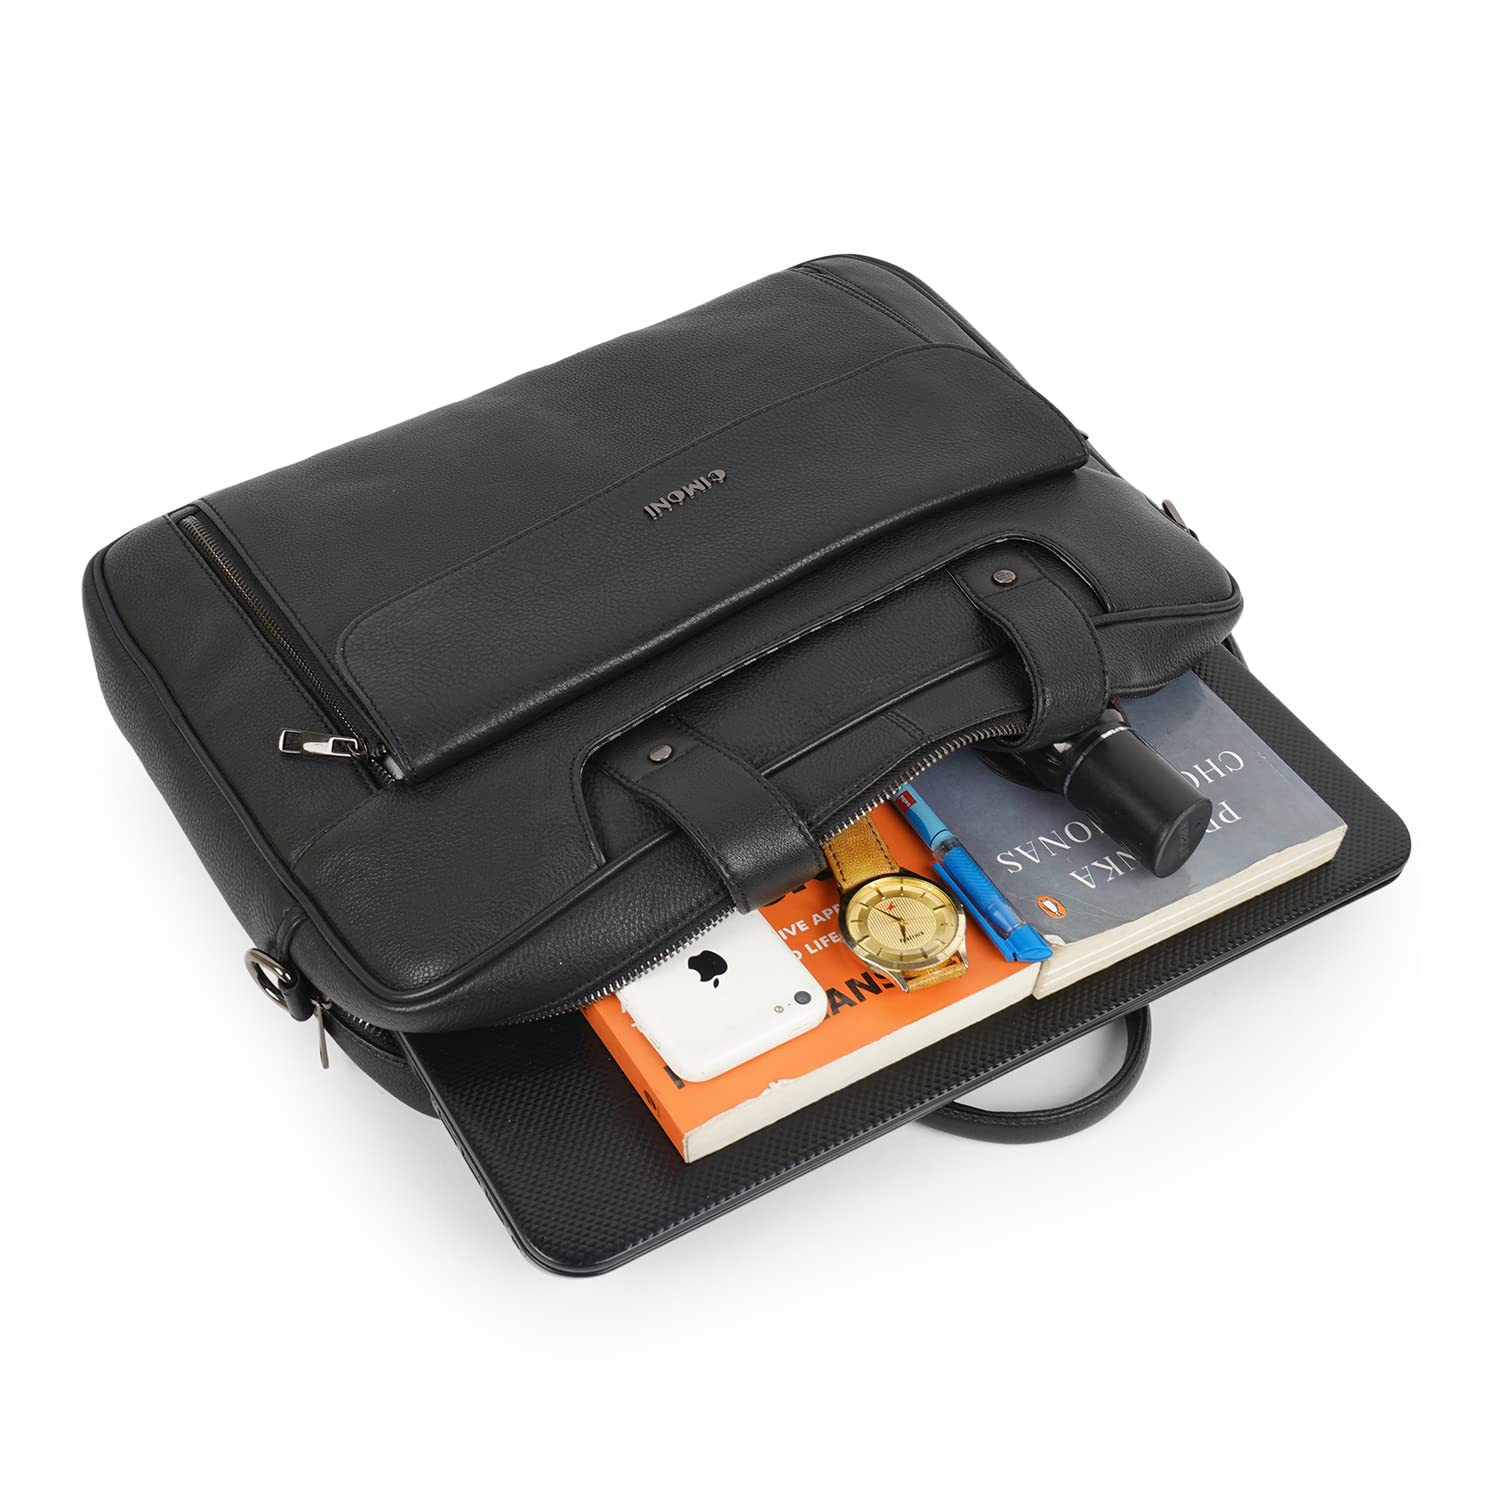 CIMONI® Synthetic Genuine Leather Bag Classic Top Handle Laptop Bag Handheld 15.6 Inch Water Resistant Briefcase Messenger Bag Carrying Handbag (Color - Black)